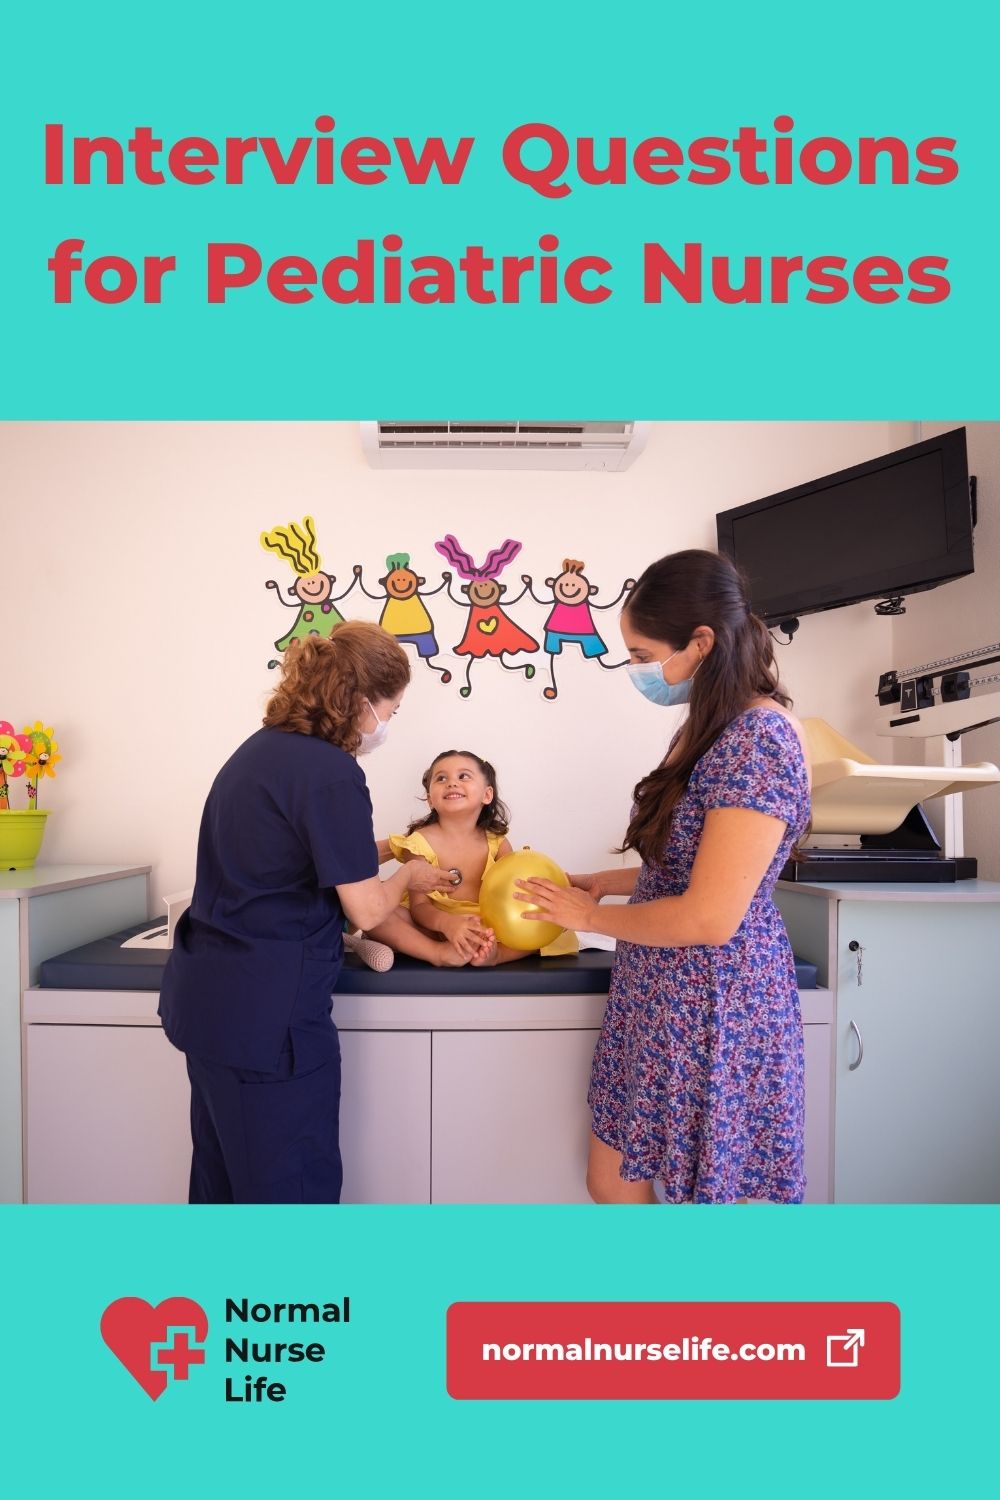 Interview questions for pediatric nurses